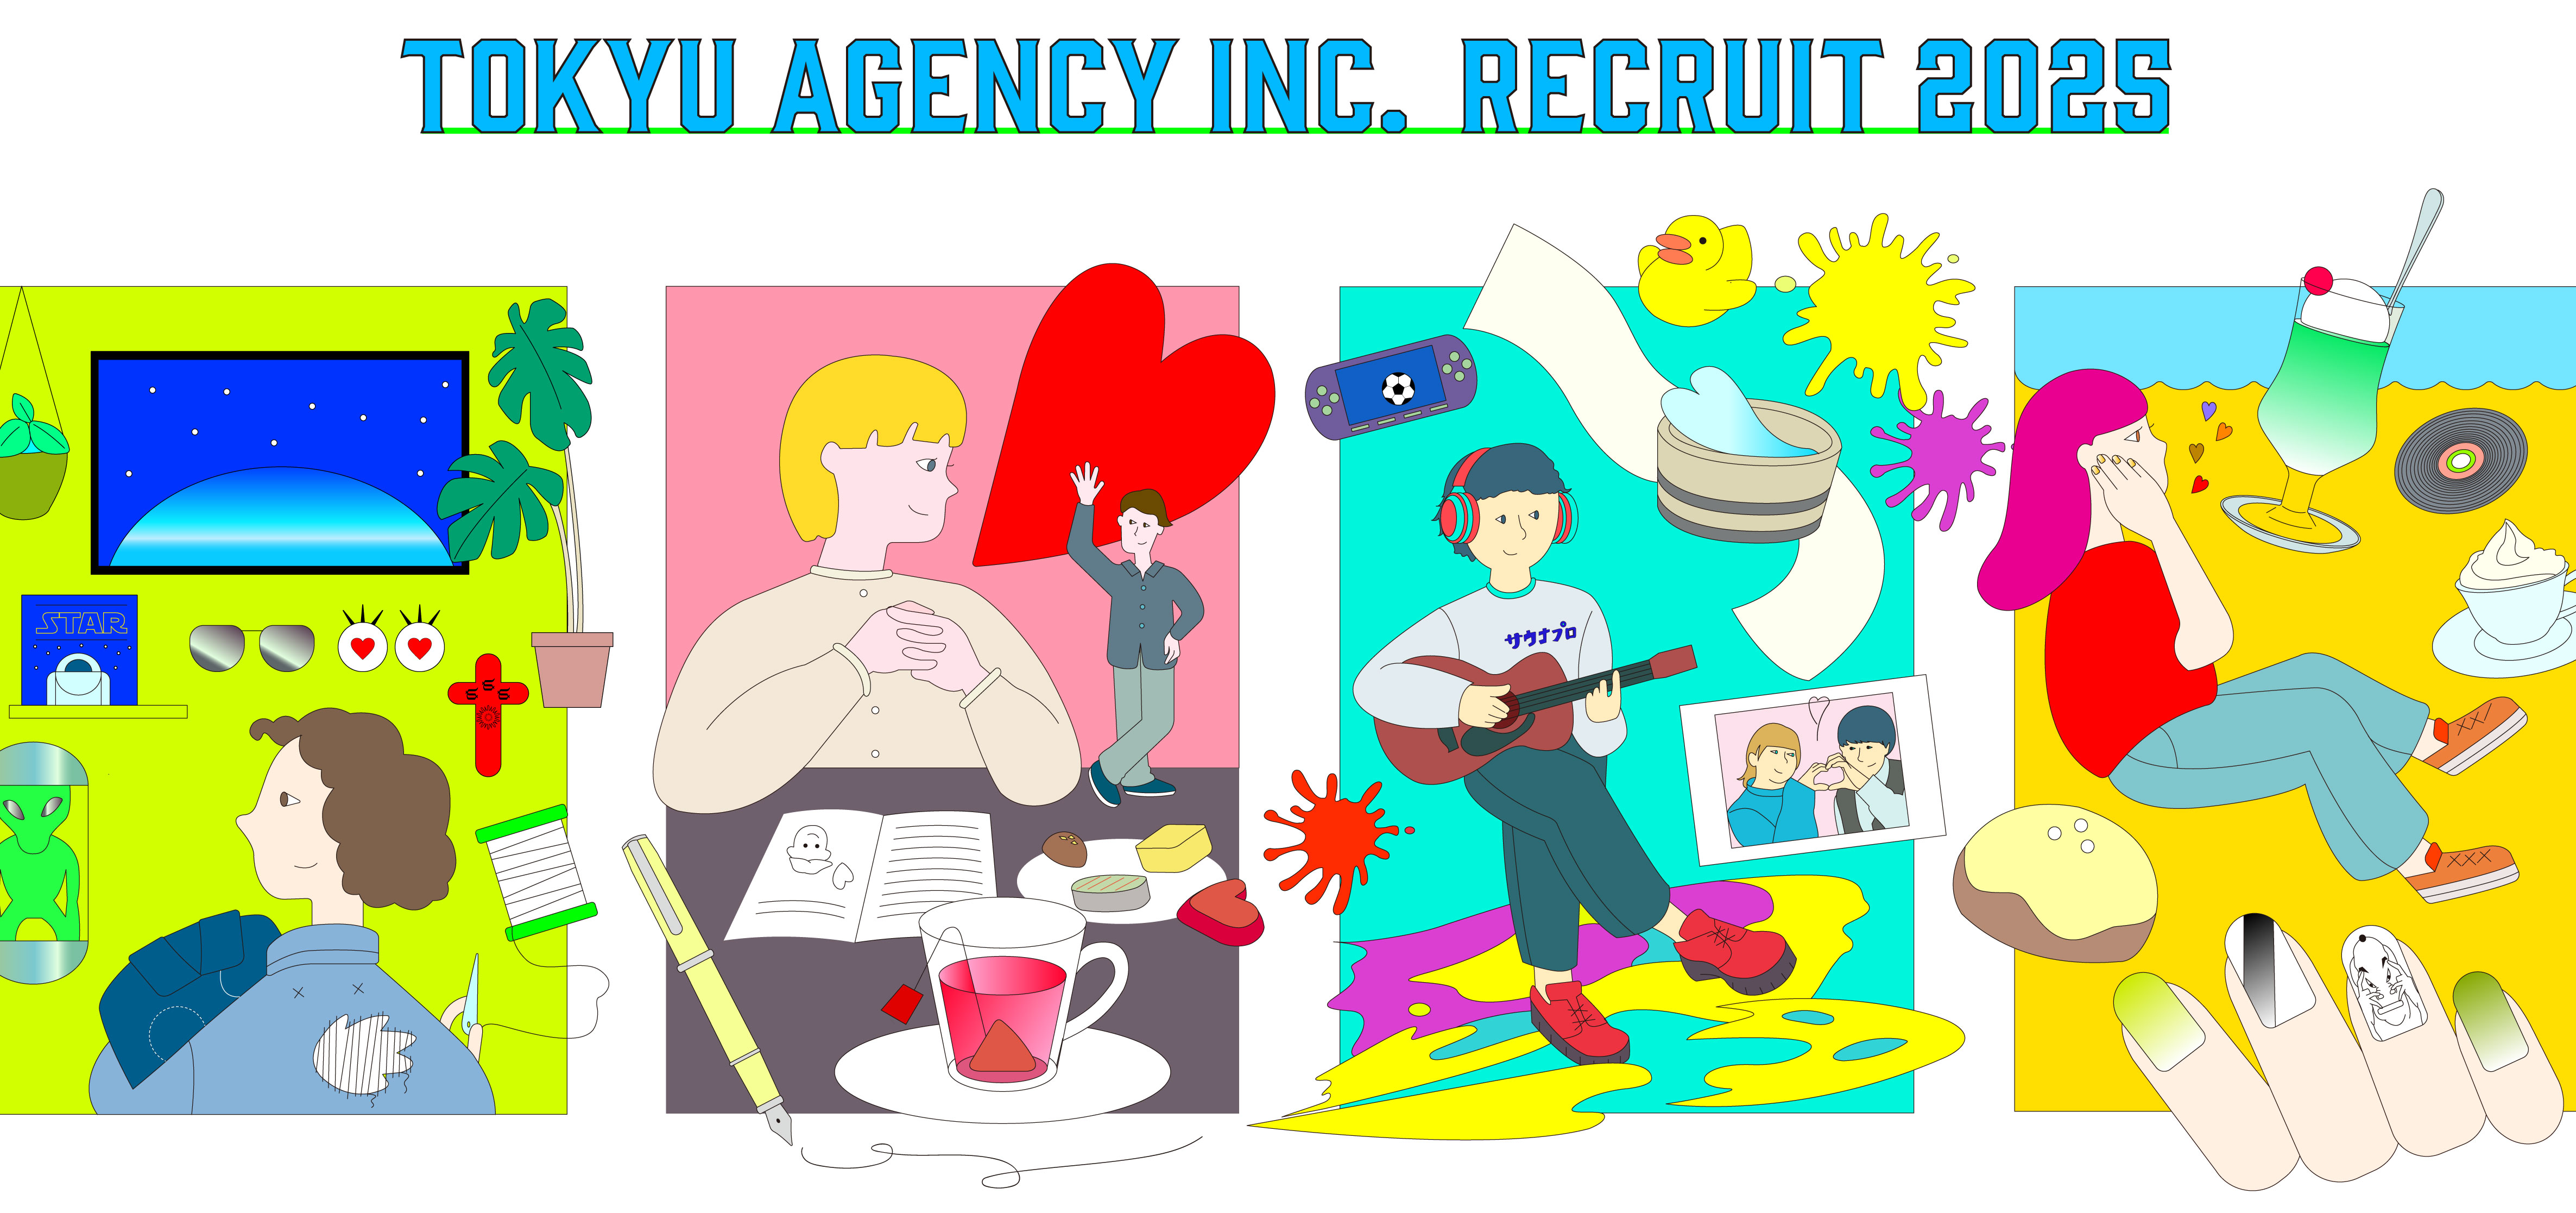 Tokyu Agency recruit